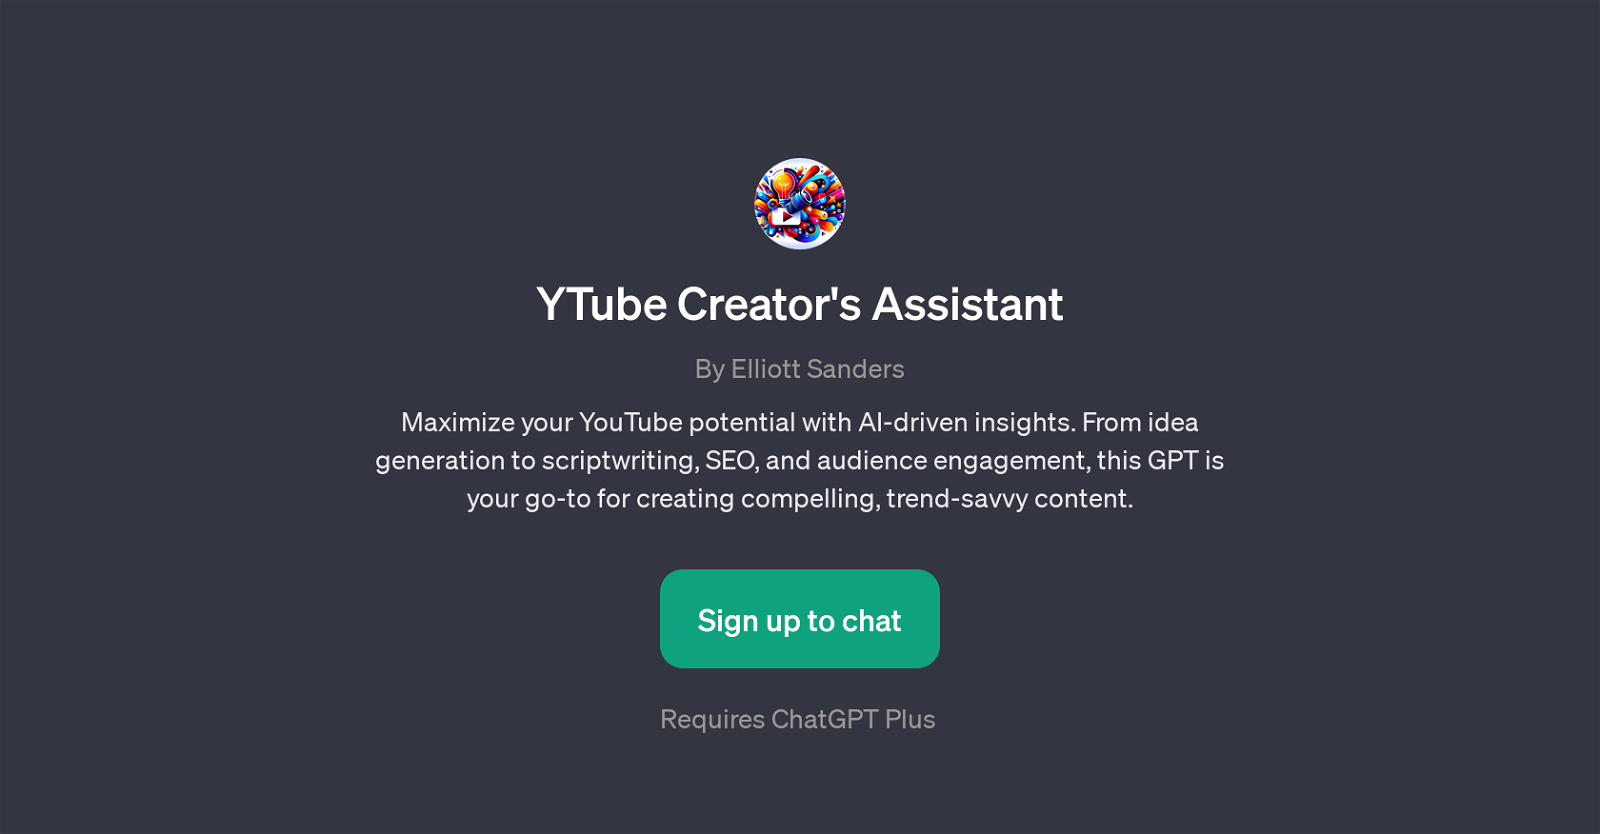 YTube Creator's Assistant website